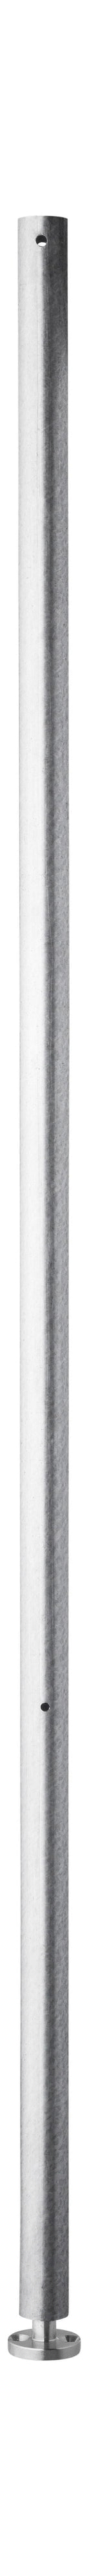 Strängmöbler Sträng System Metall Rod Galvanized Free Standing Outdoor